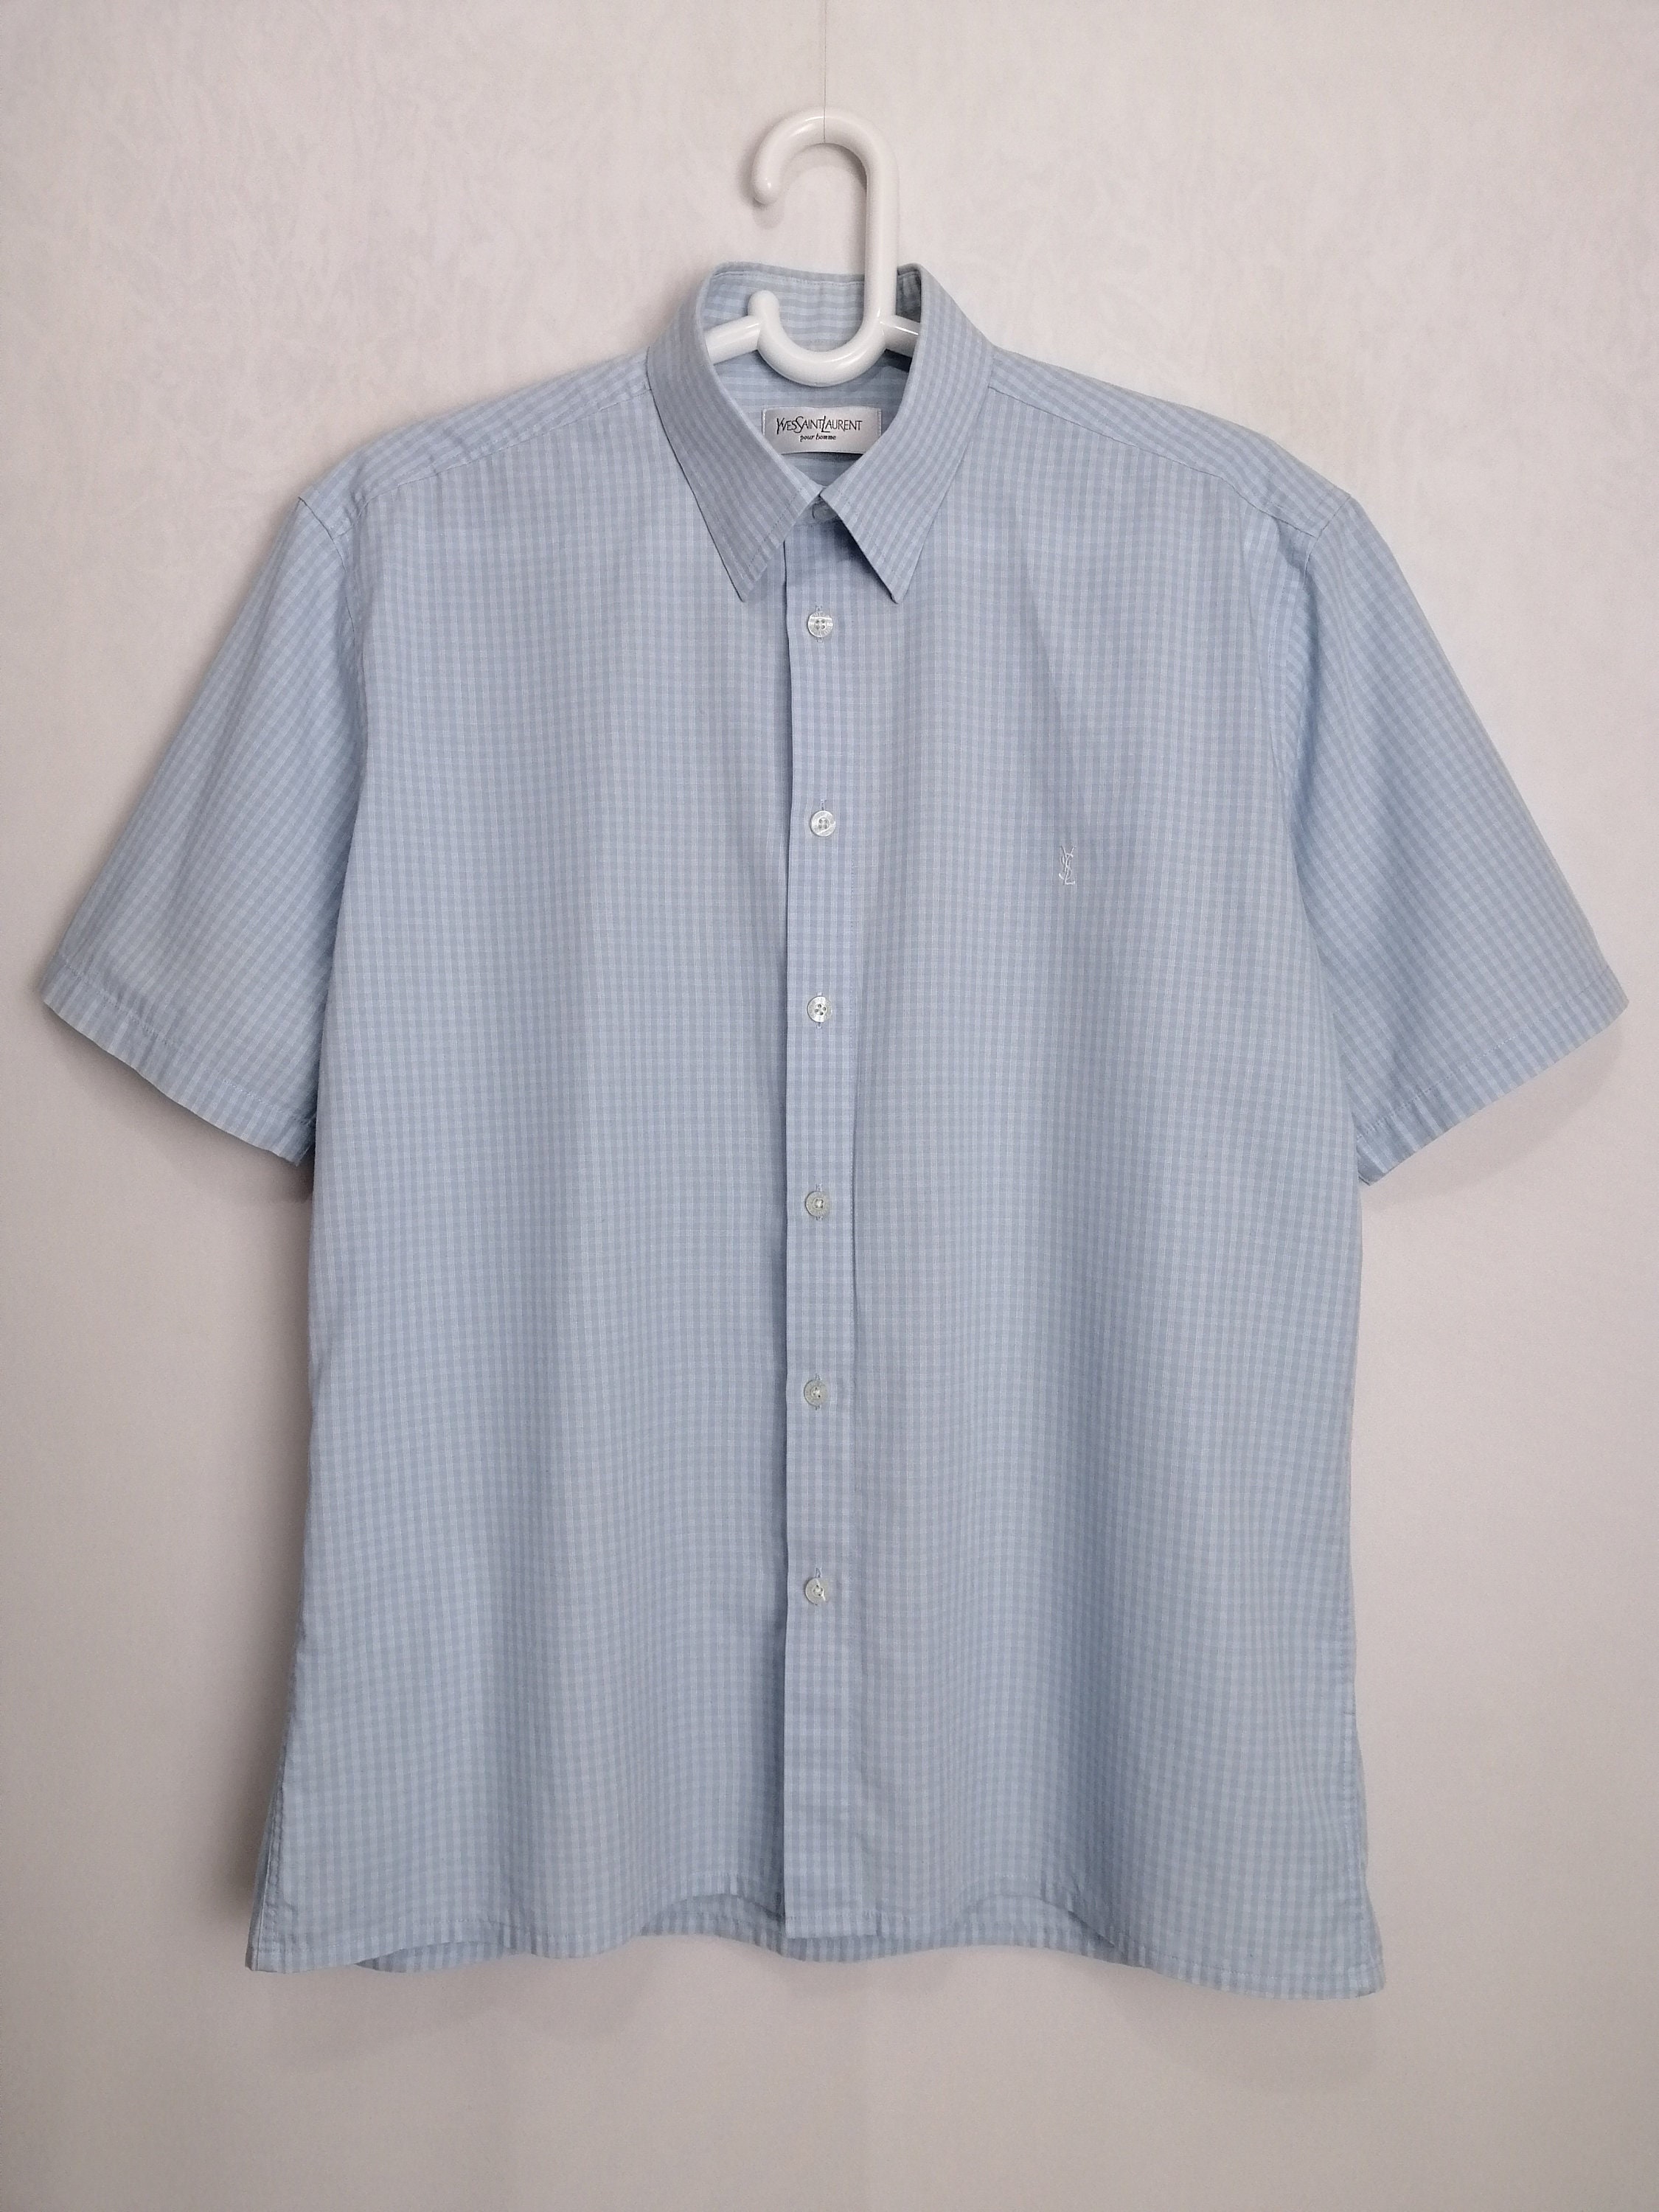 YVES SAINT LAURENT Mens Shirt 90s YSl Pour Homme Shirt - Etsy 日本